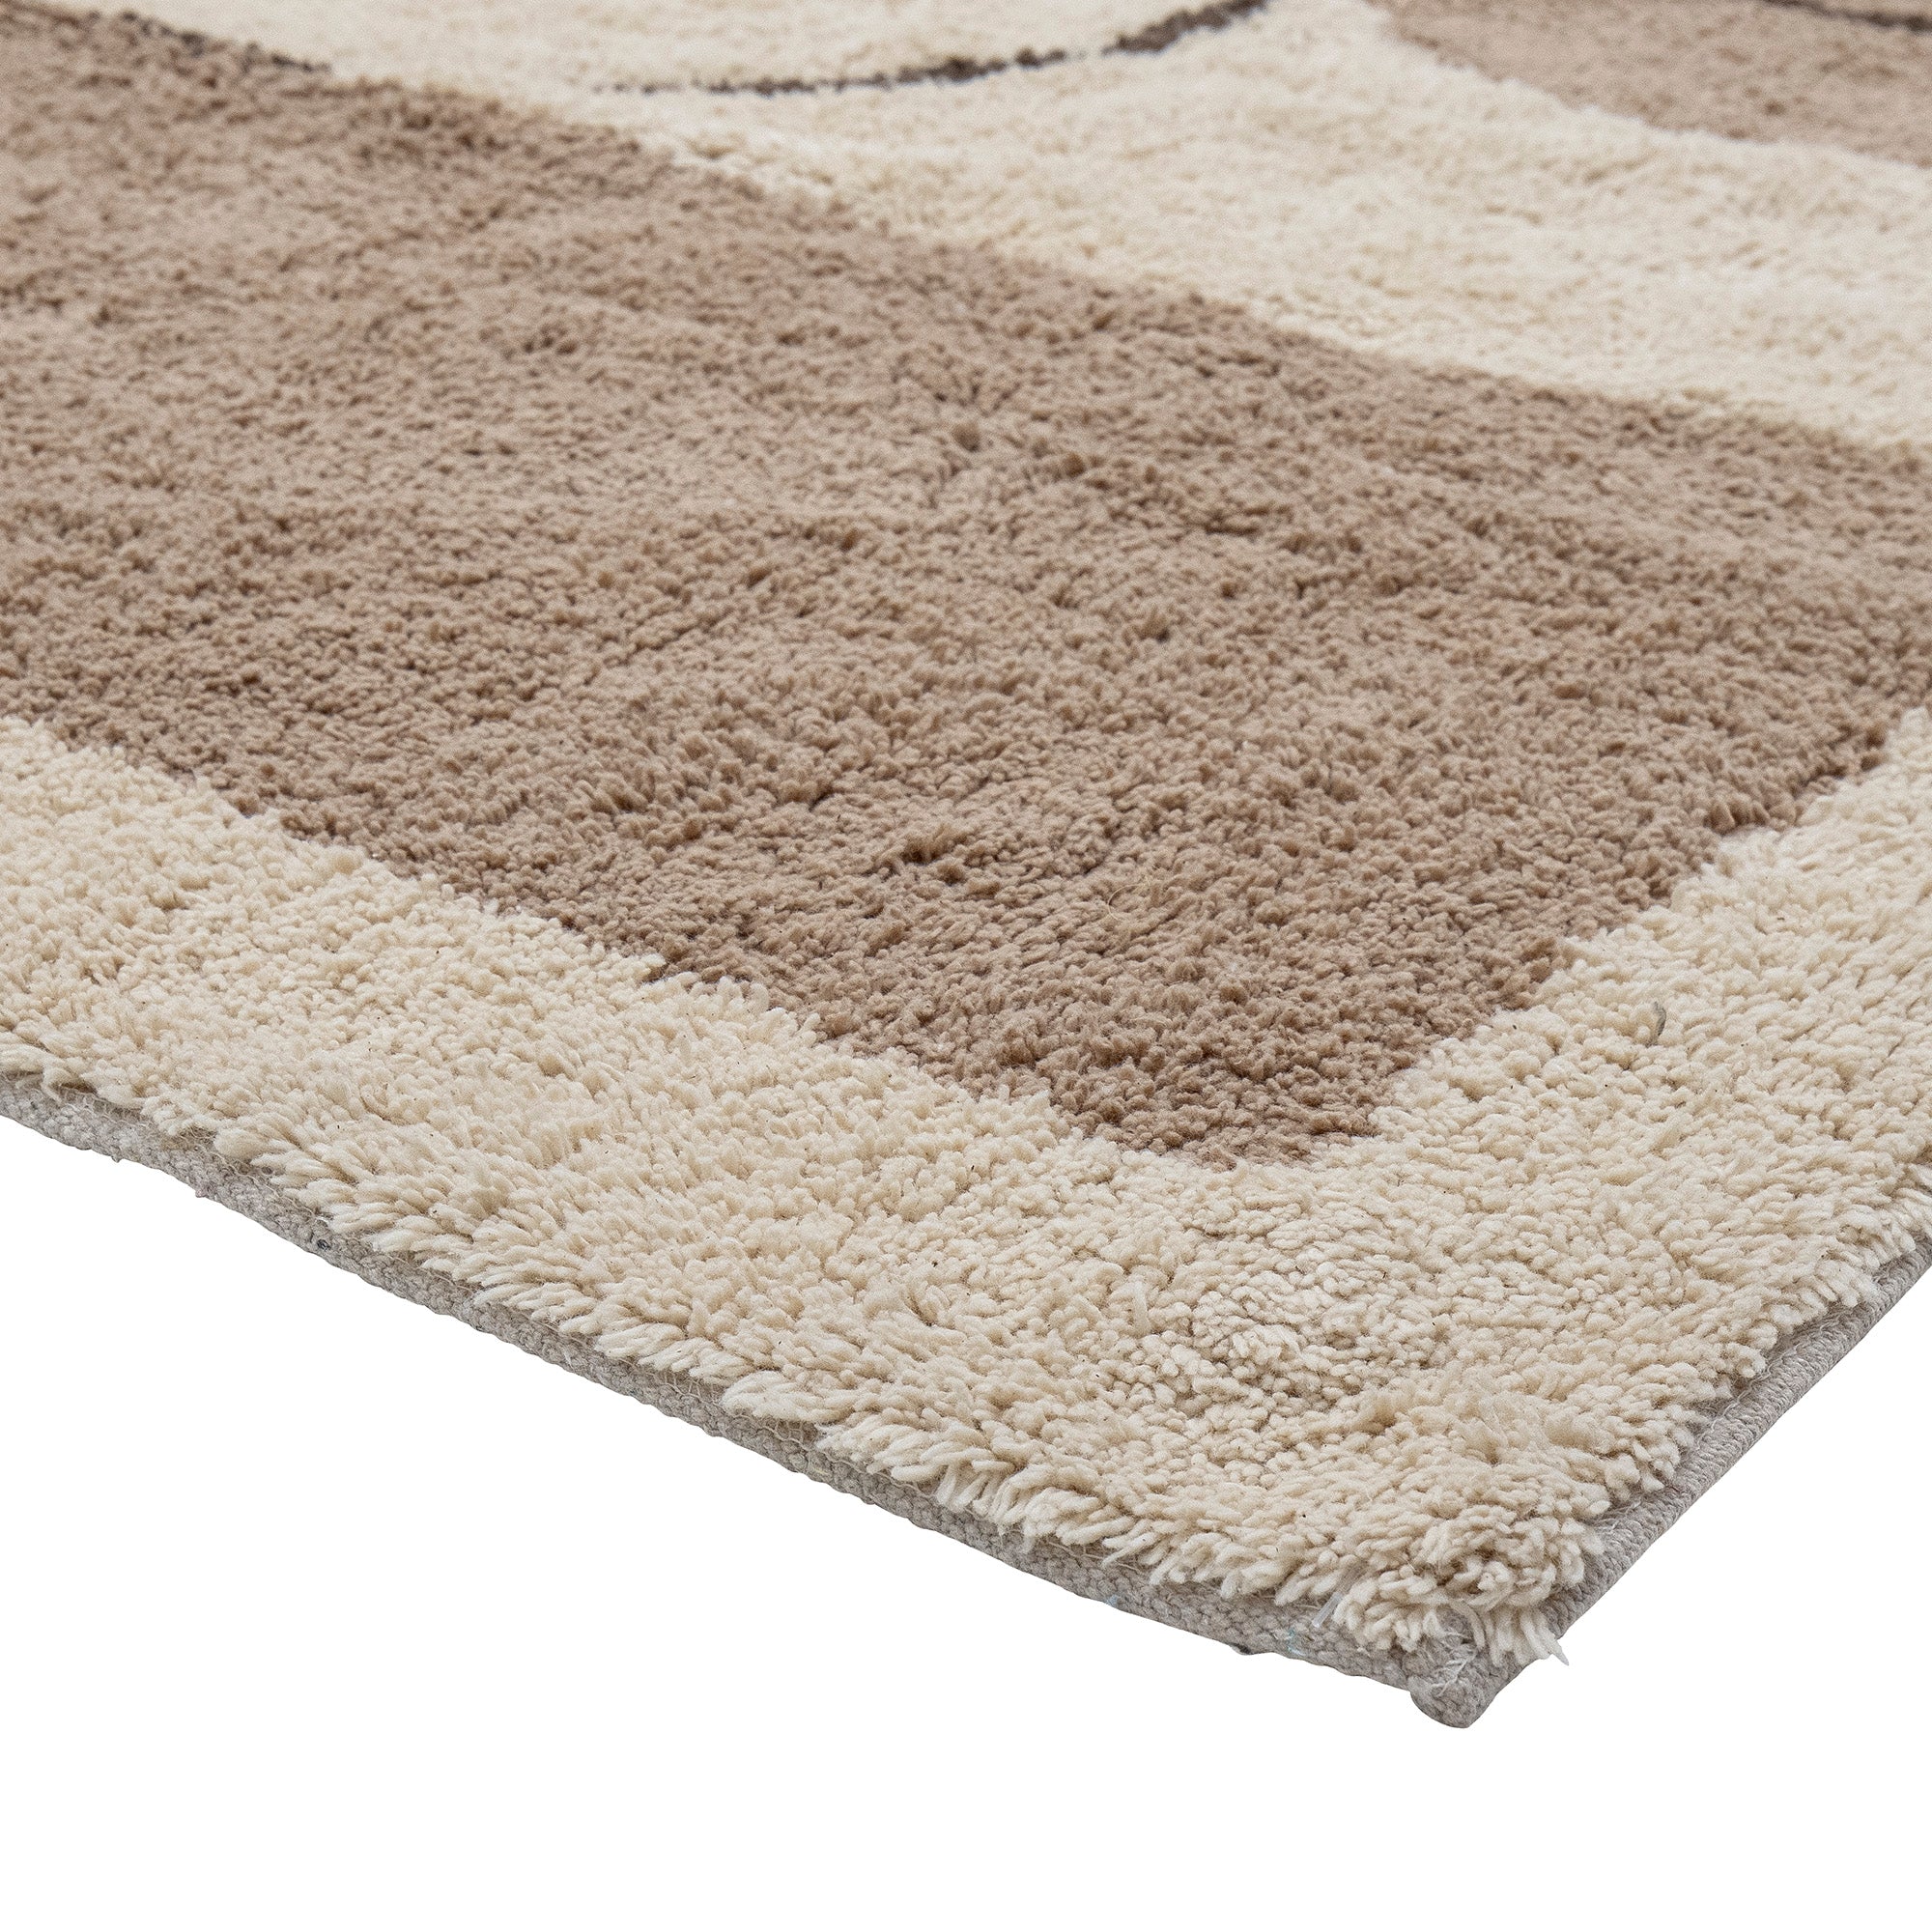 Cotton rug 215x150